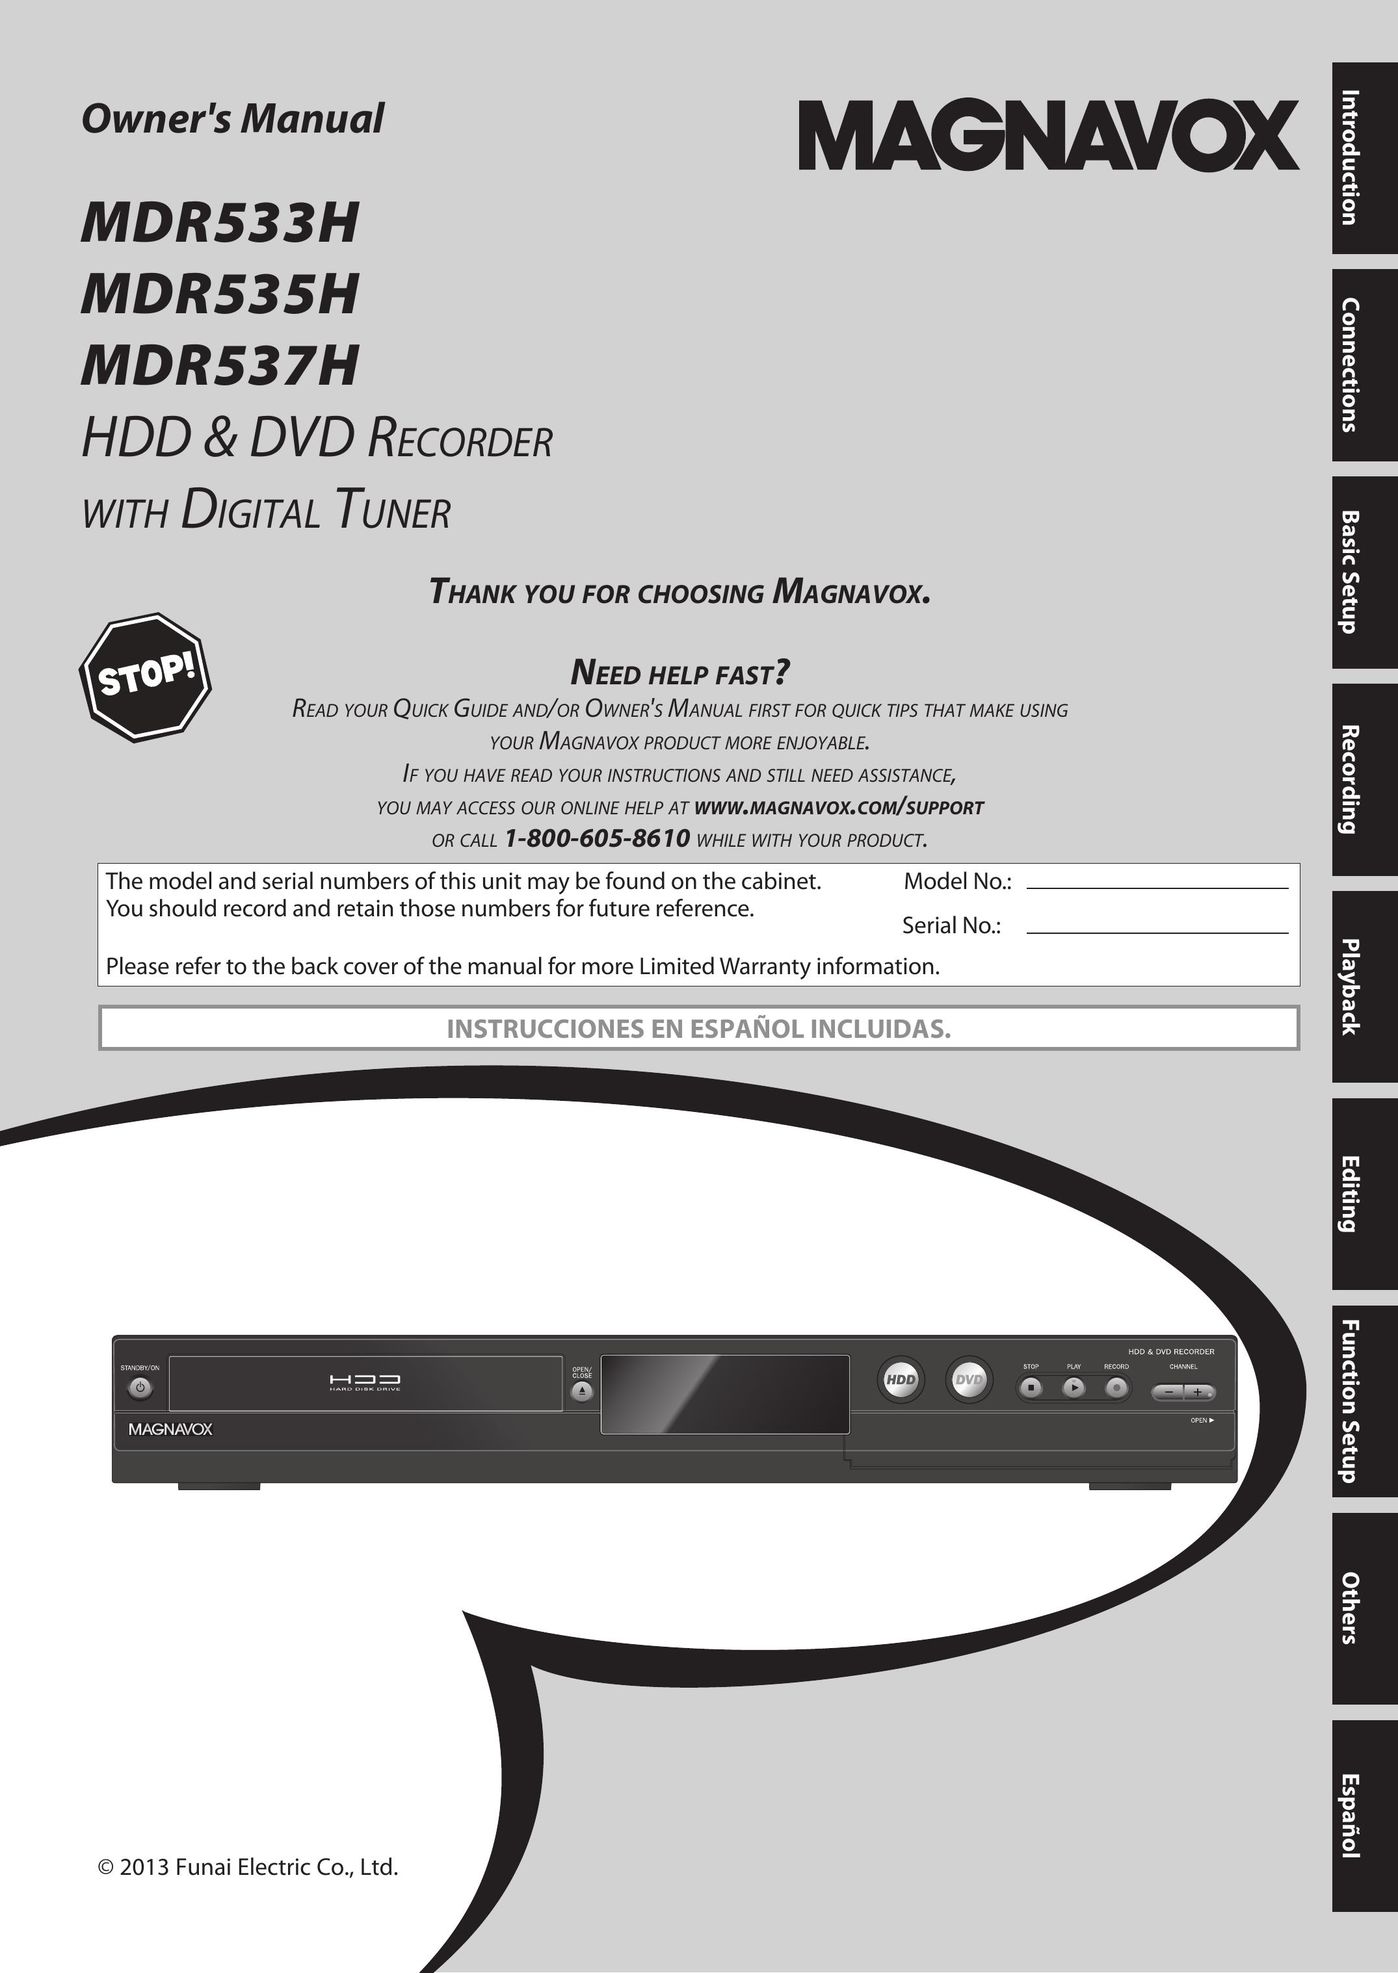 Magnavox MDR537H DVR User Manual